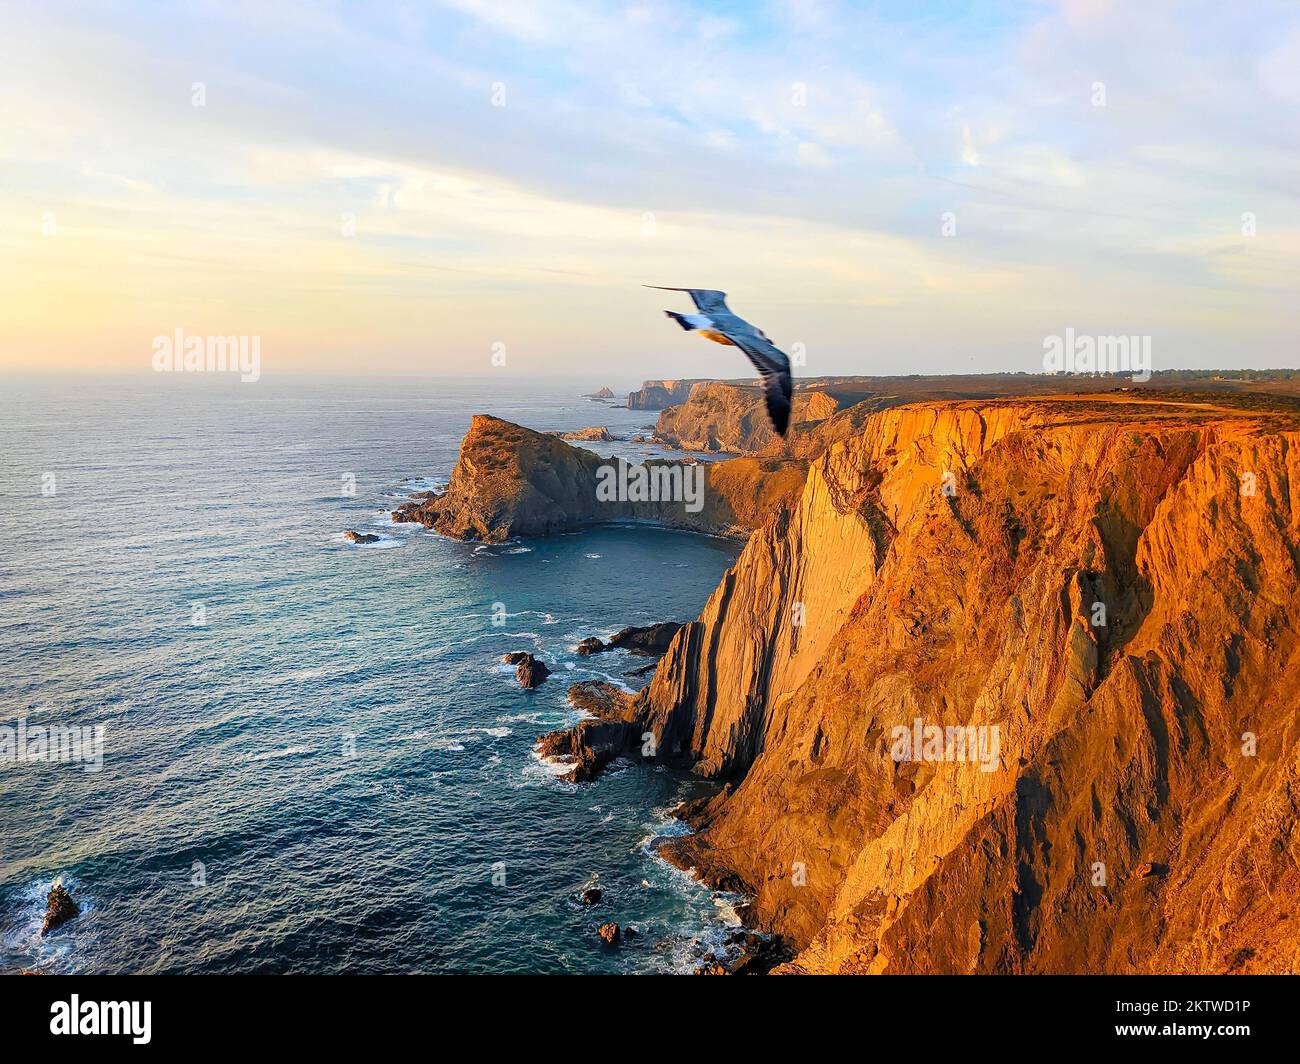 Seagull flyibg over Arrifana coast with rocky cliffs, ocean seascape at sunset, Aljezur, Algarve, Portugal Stock Photo